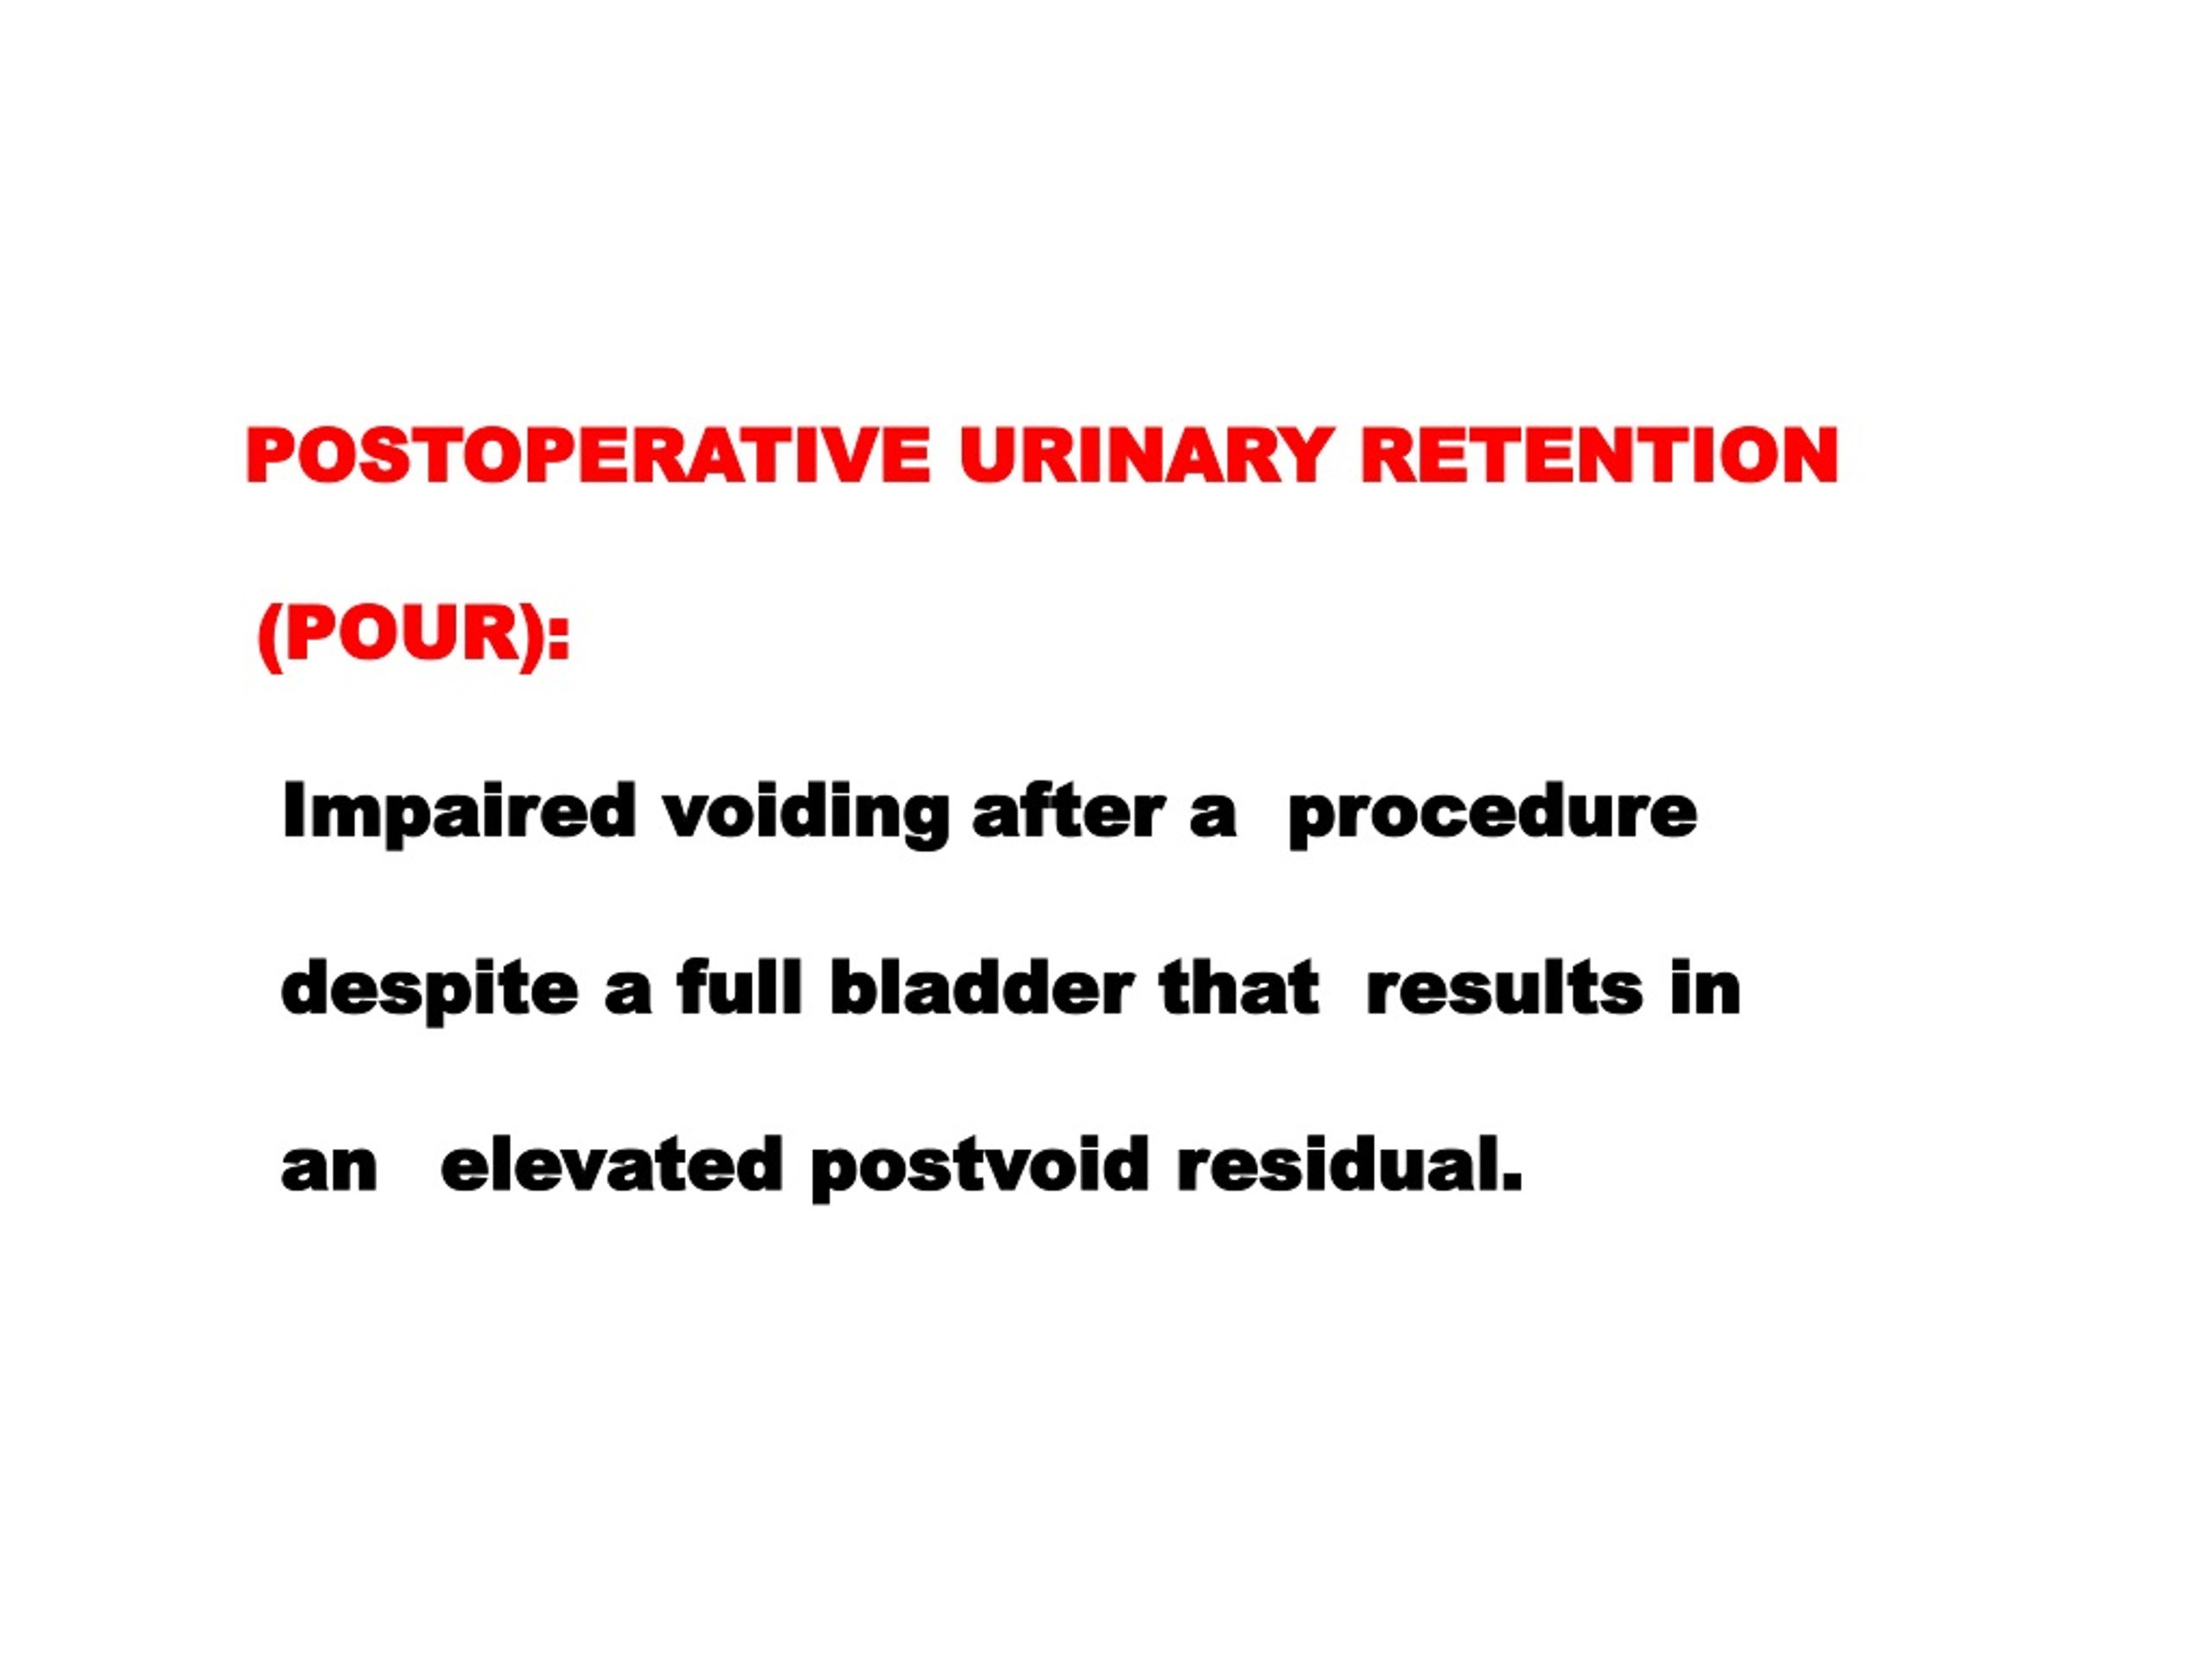 PPT - Postoperative urinary retention PowerPoint Presentation